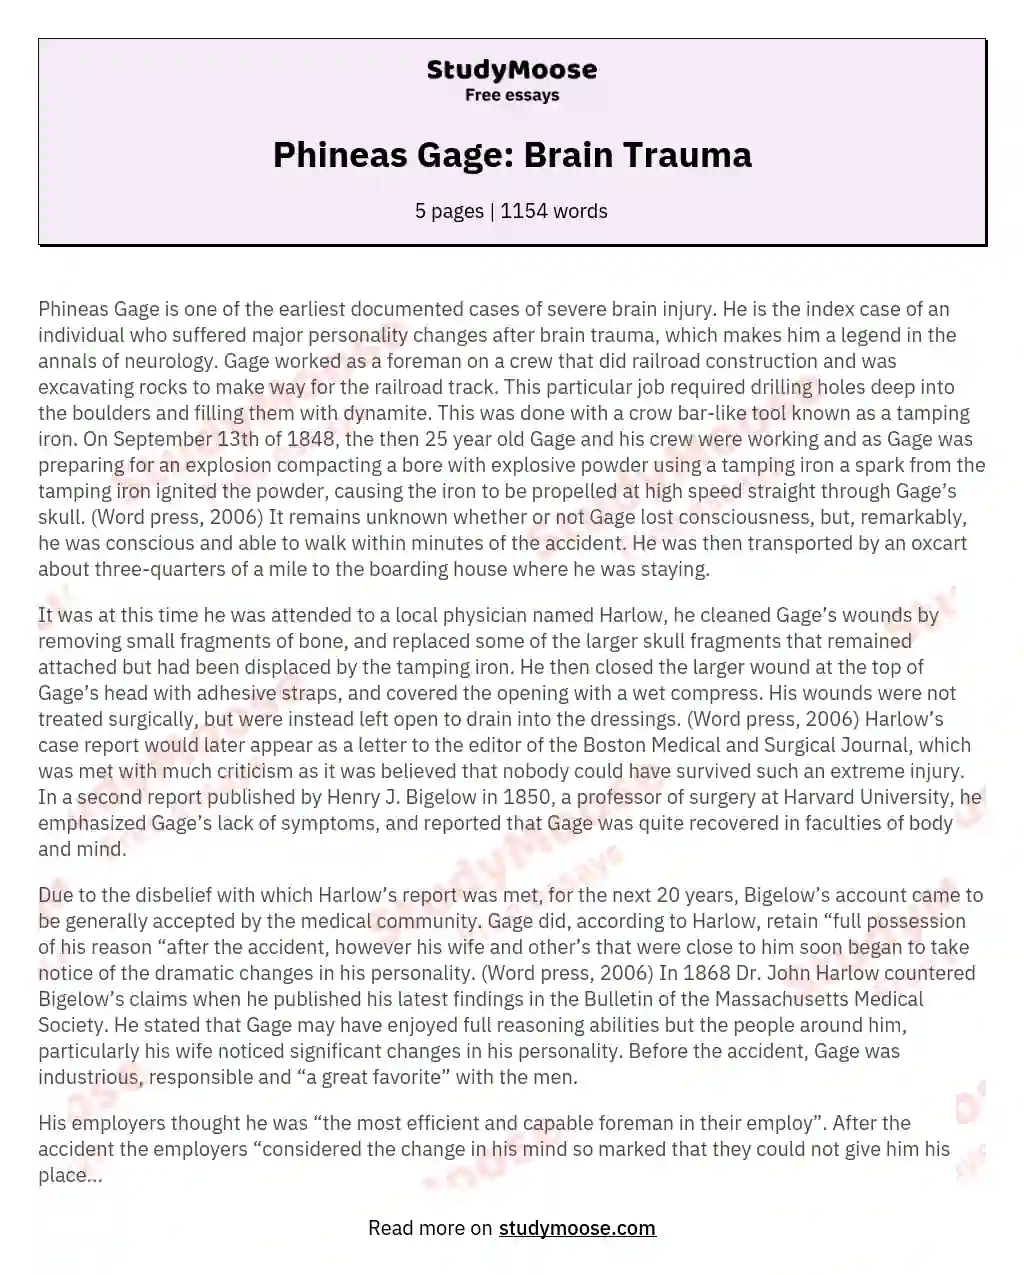 Phineas Gage: Brain Trauma essay